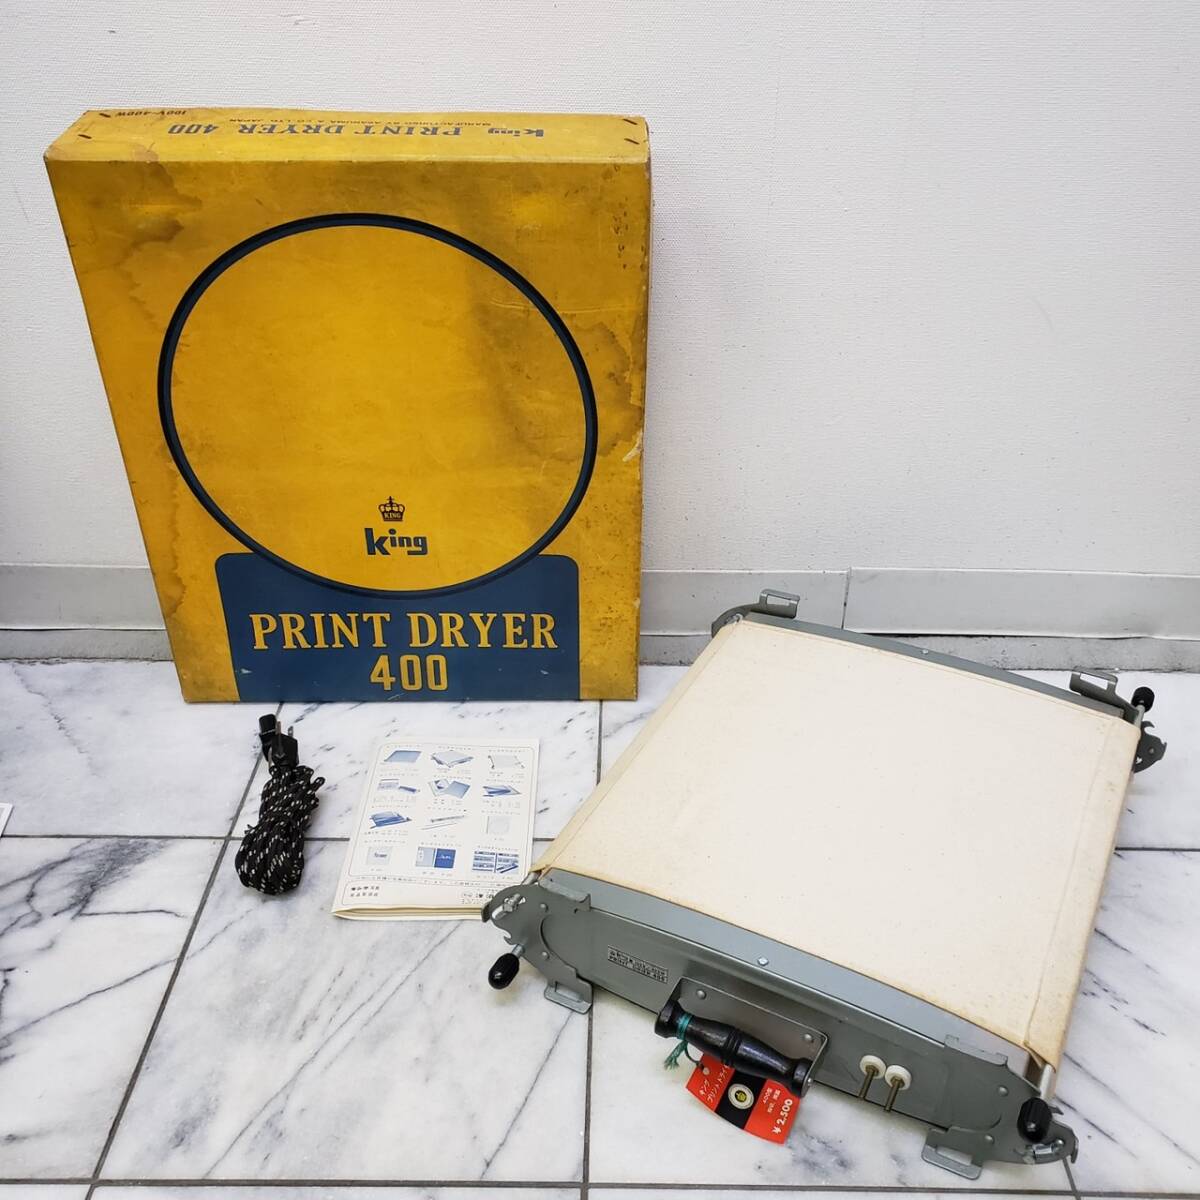  postage 1380 jpy ~ Junk electrification has confirmed King King PRINT DRYER 400 print dryer 